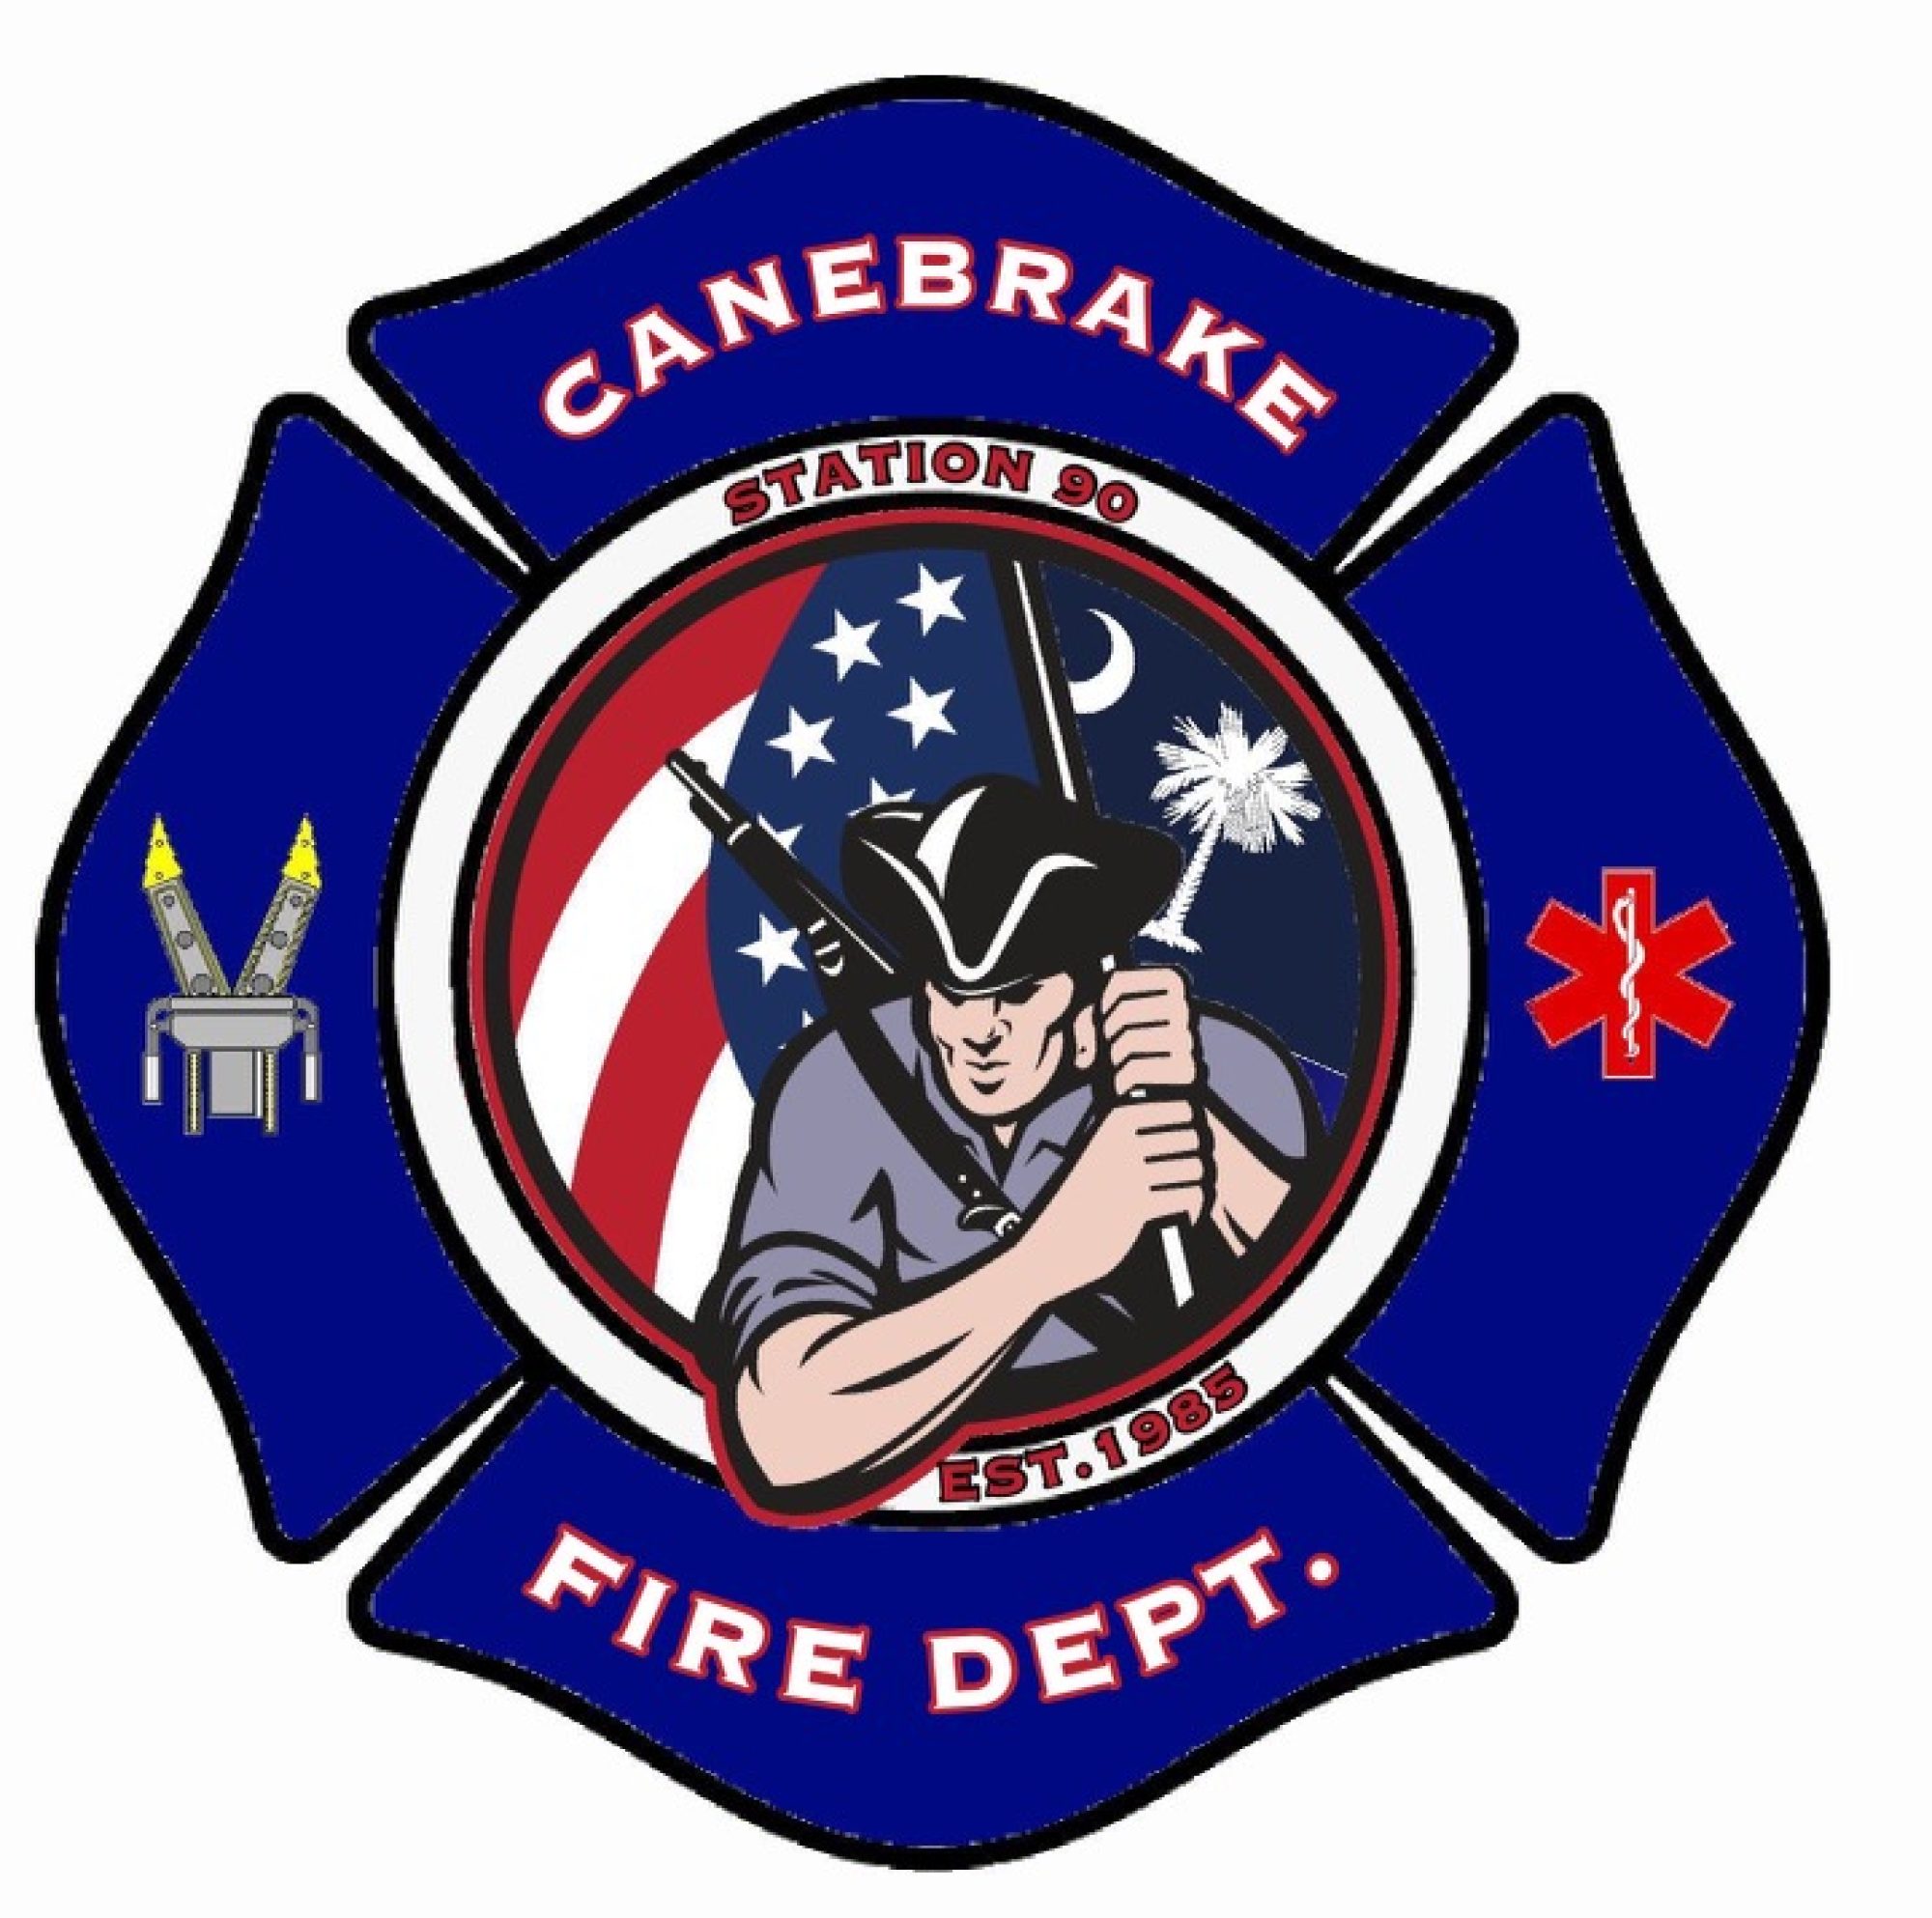 CANEBRAKE FIRE DEPARTMENT